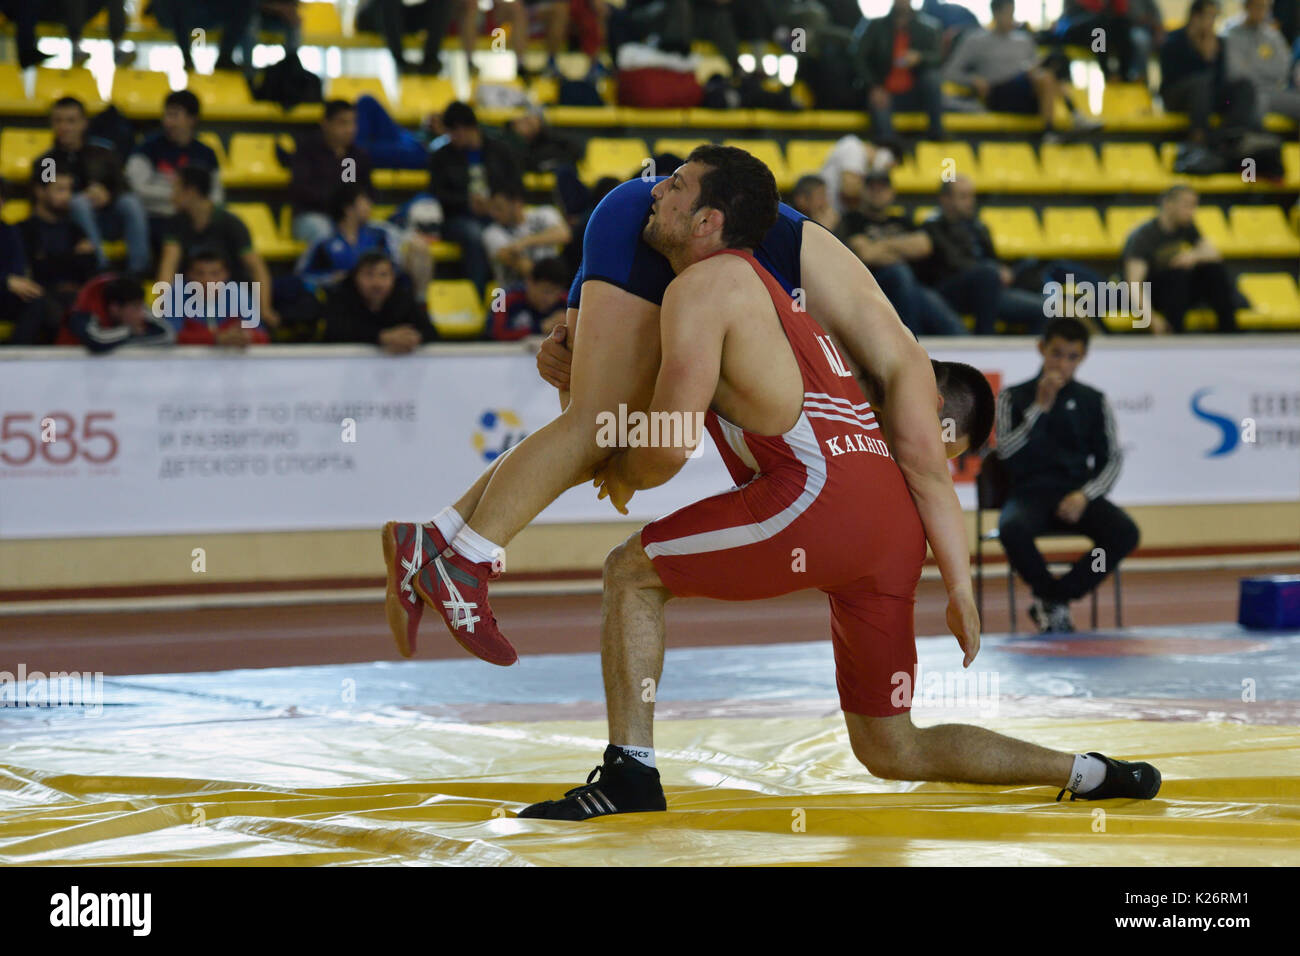 St. Petersburg, Russia - May 6, 2015: Aslan Kakhidze of Kazakhstan against unidentified athlete during International freestyle wrestling tournament Vi Stock Photo